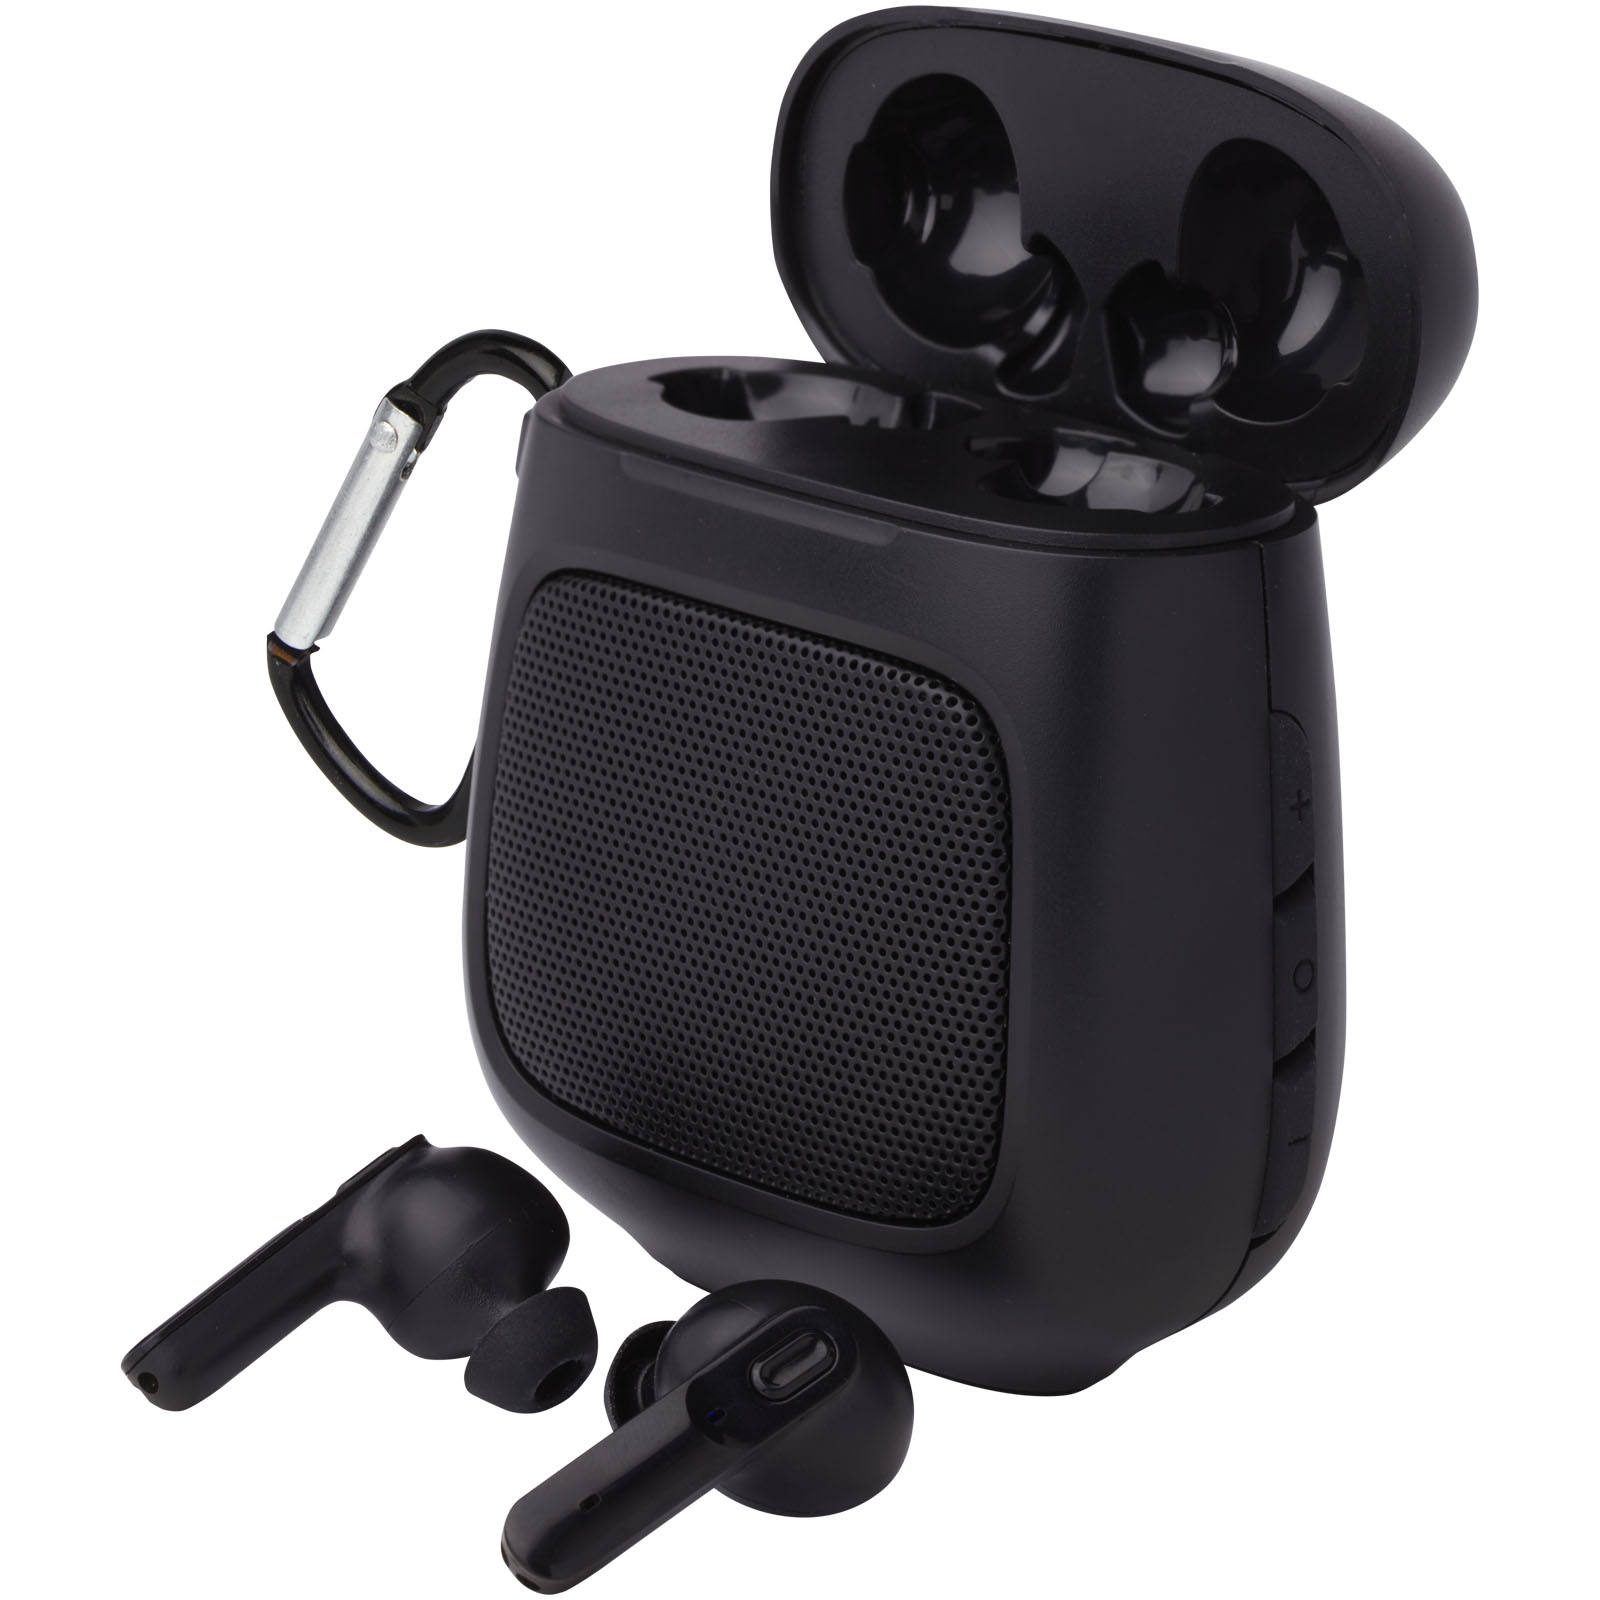 Speakers - Remix auto pair True Wireless earbuds and speaker